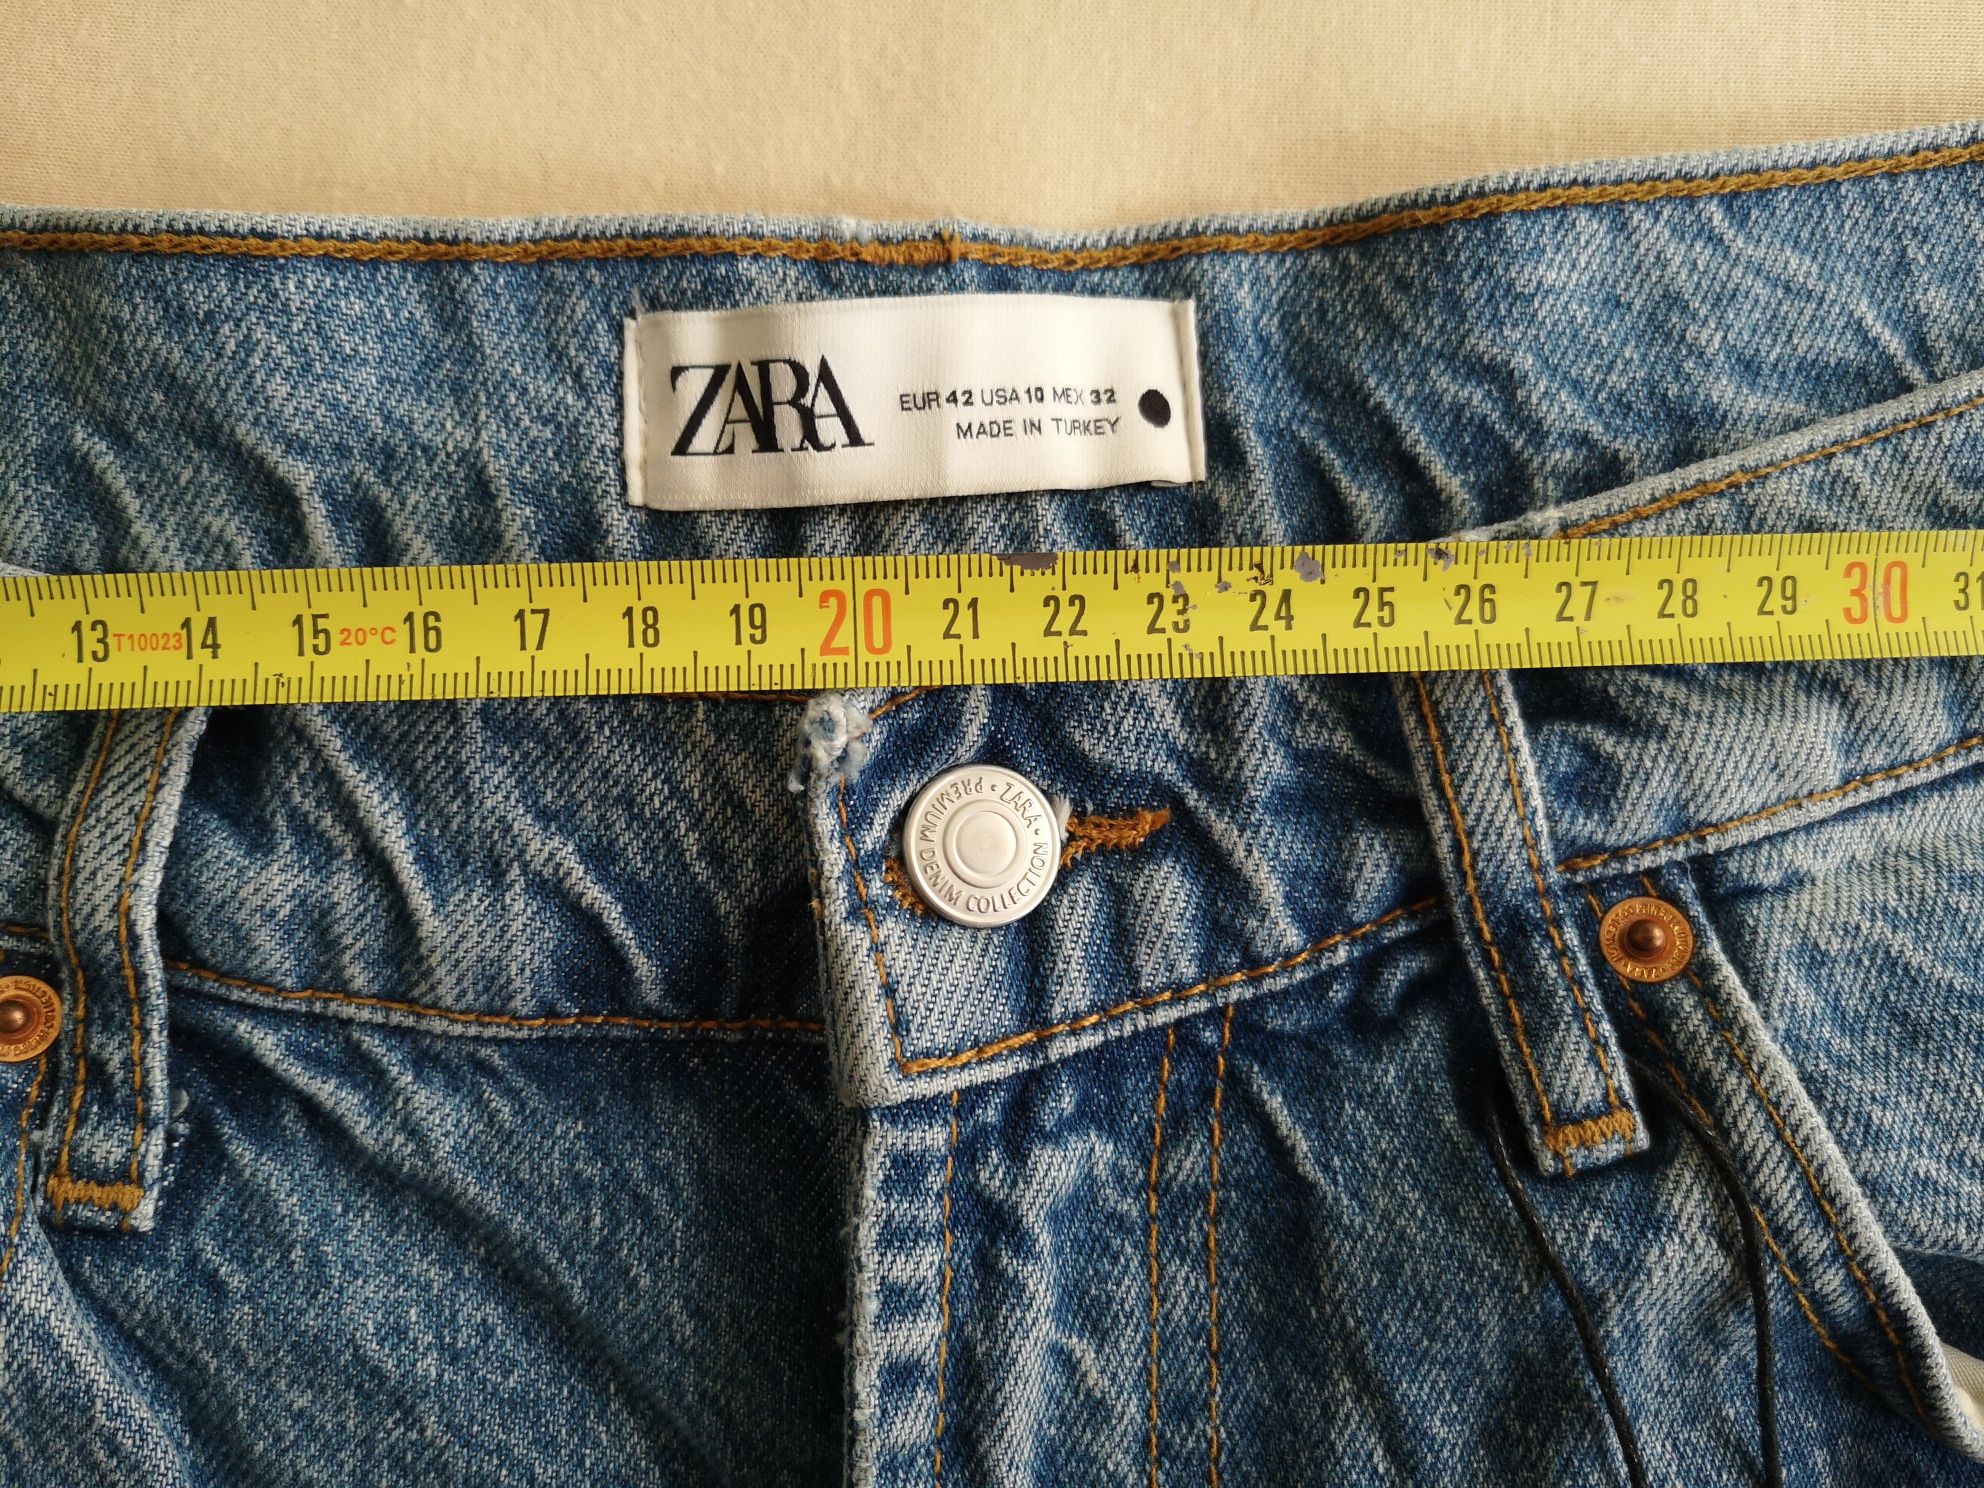 Blugi Zara noi cu eticheta mar 42, The Slim Straight